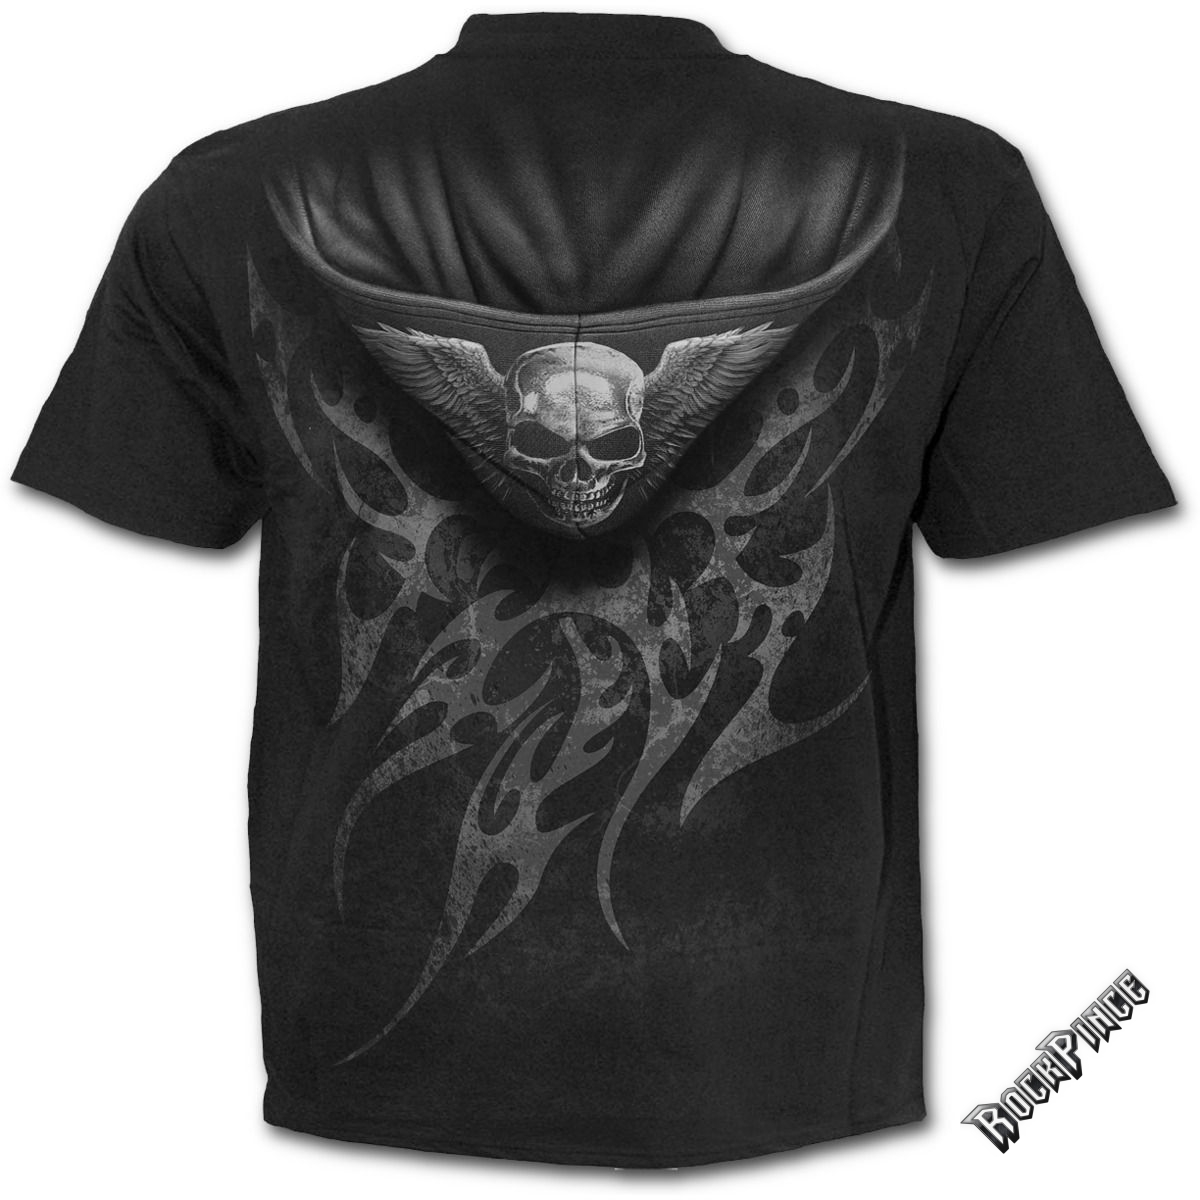 UNZIPPED - T-Shirt Black - T098M101